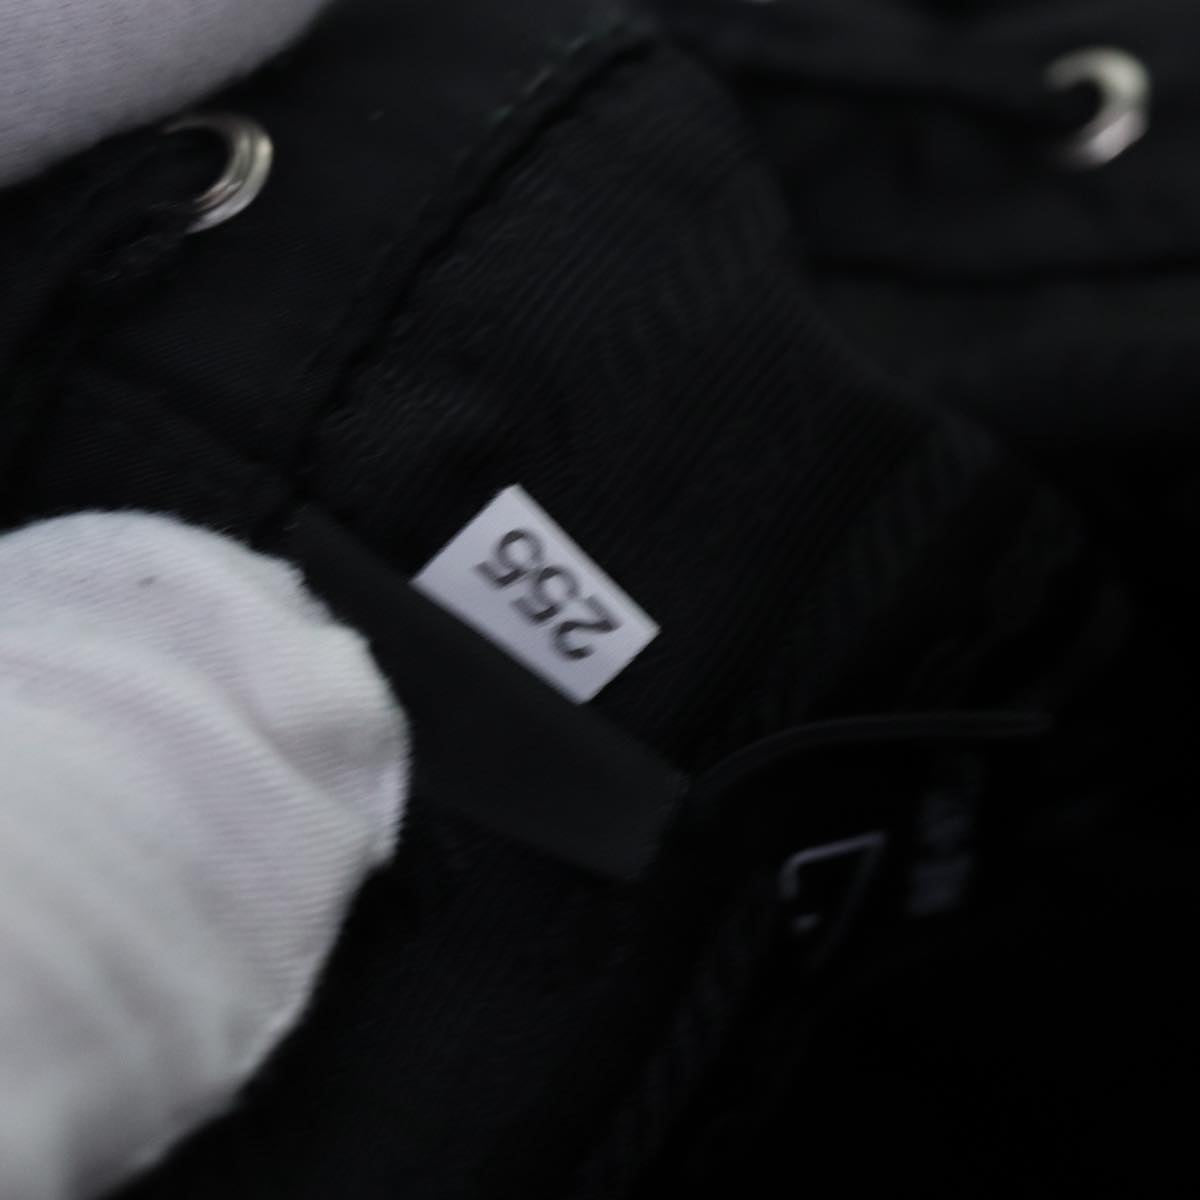 PRADA Chain Shoulder Bag Nylon Black Auth 74455A